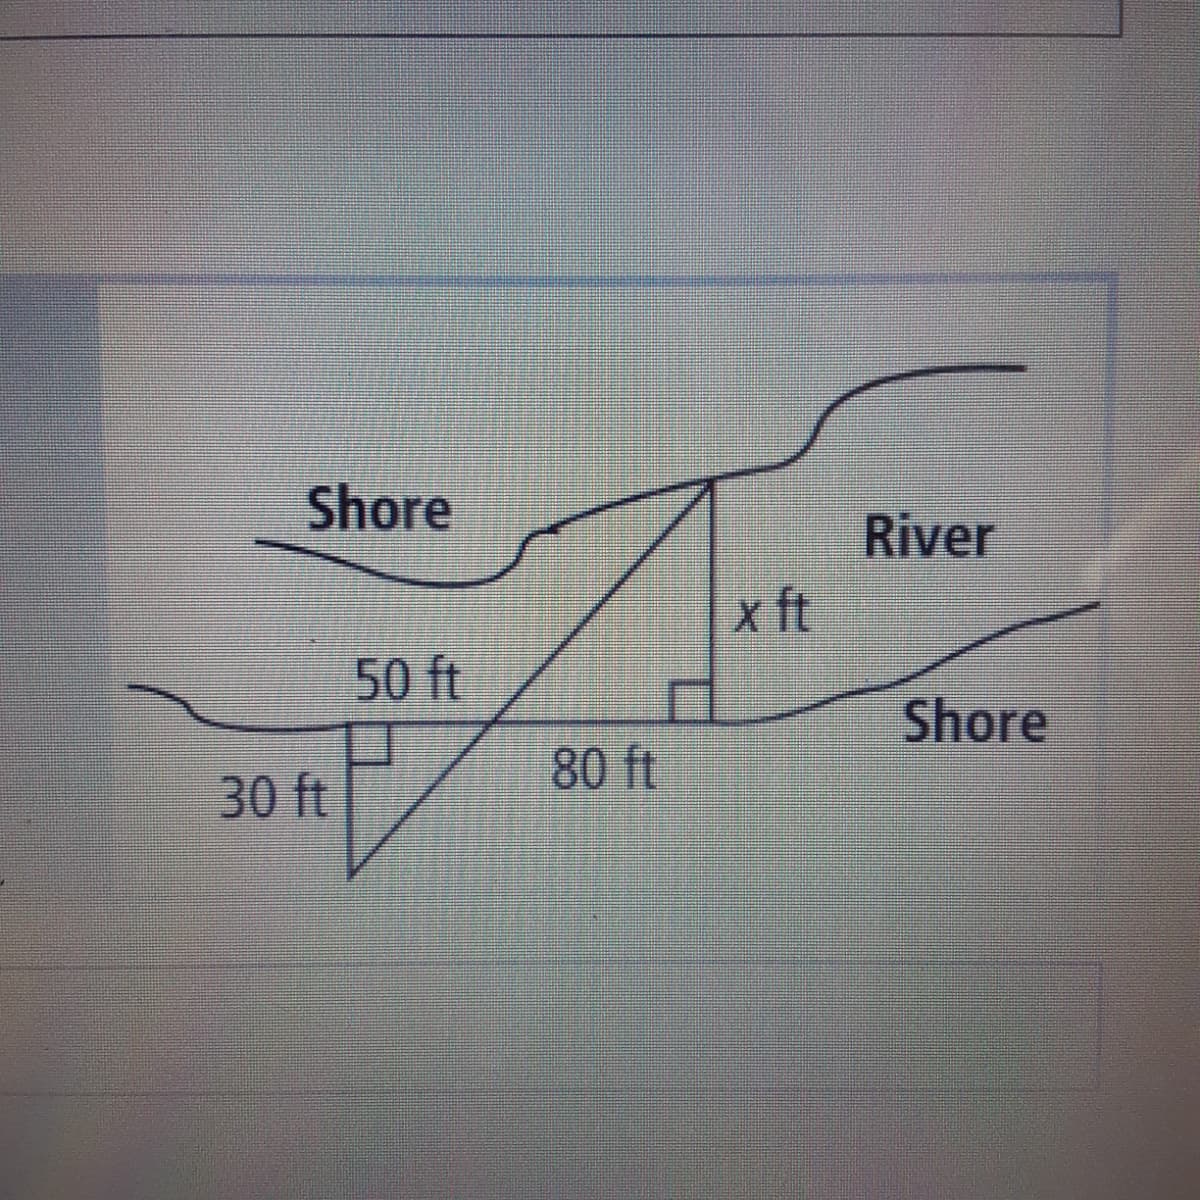 Shore
River
x ft
50 ft
Shore
80 ft
30 ft
